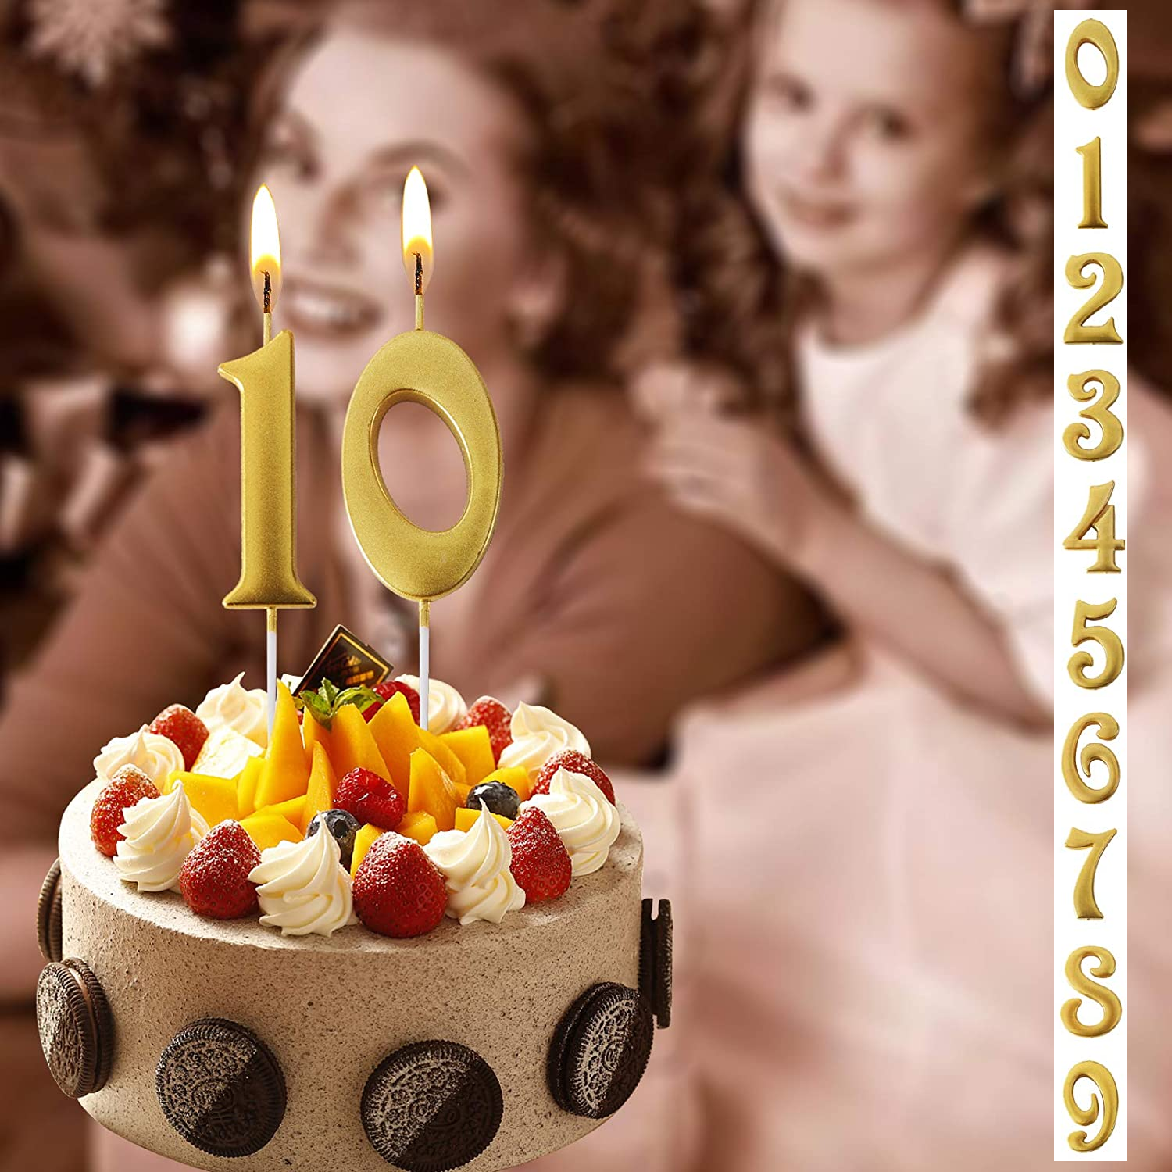 Cake/Cupcake Candle - 'Ornate' gold candle - # 0 - Rampant Coffee Company